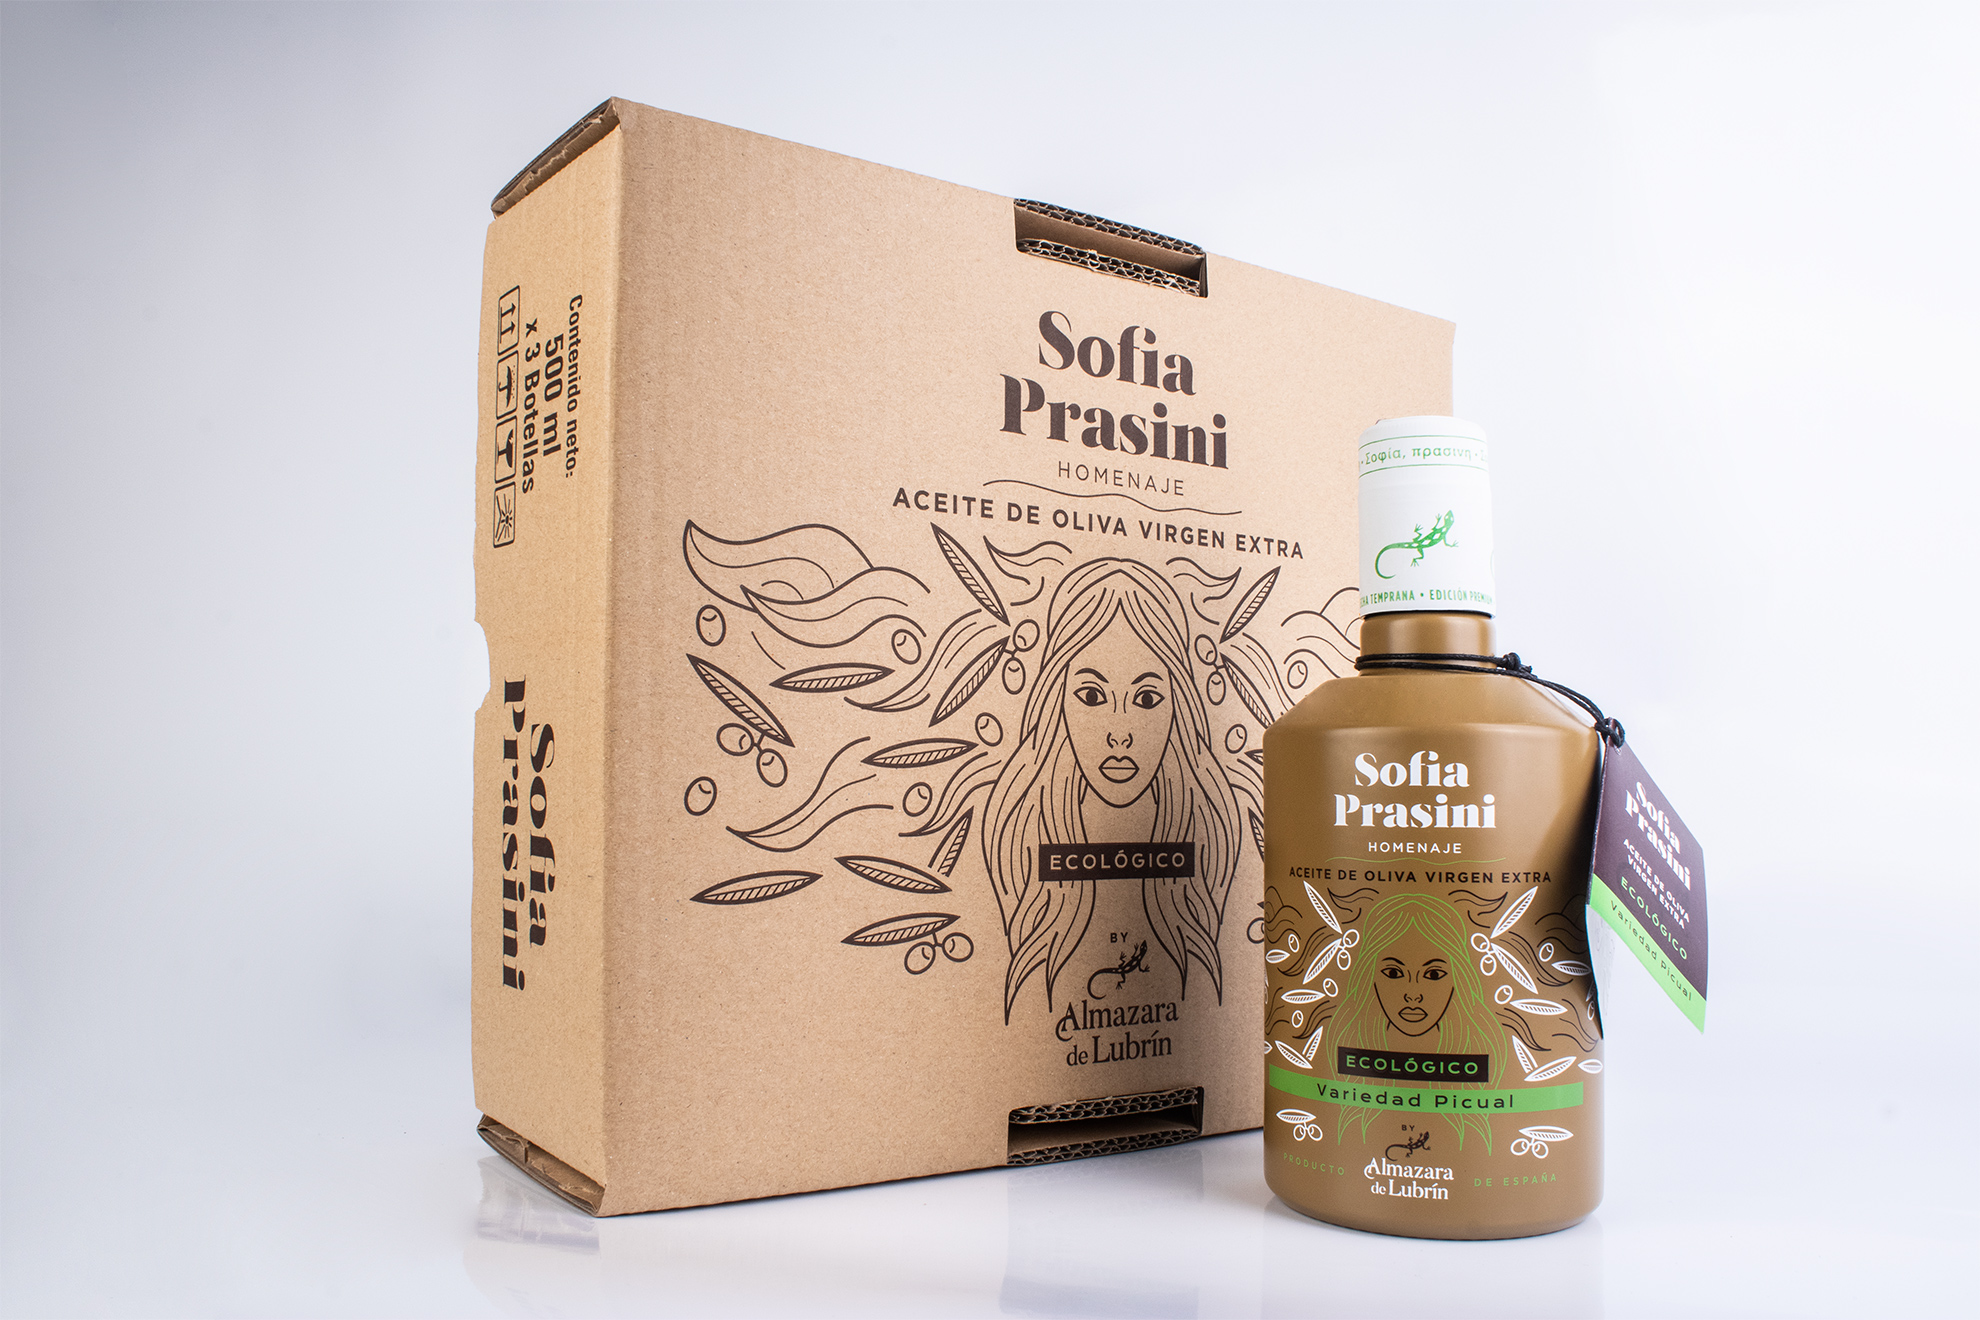 Sofia Prasini diseño de envase para aceite de oliva